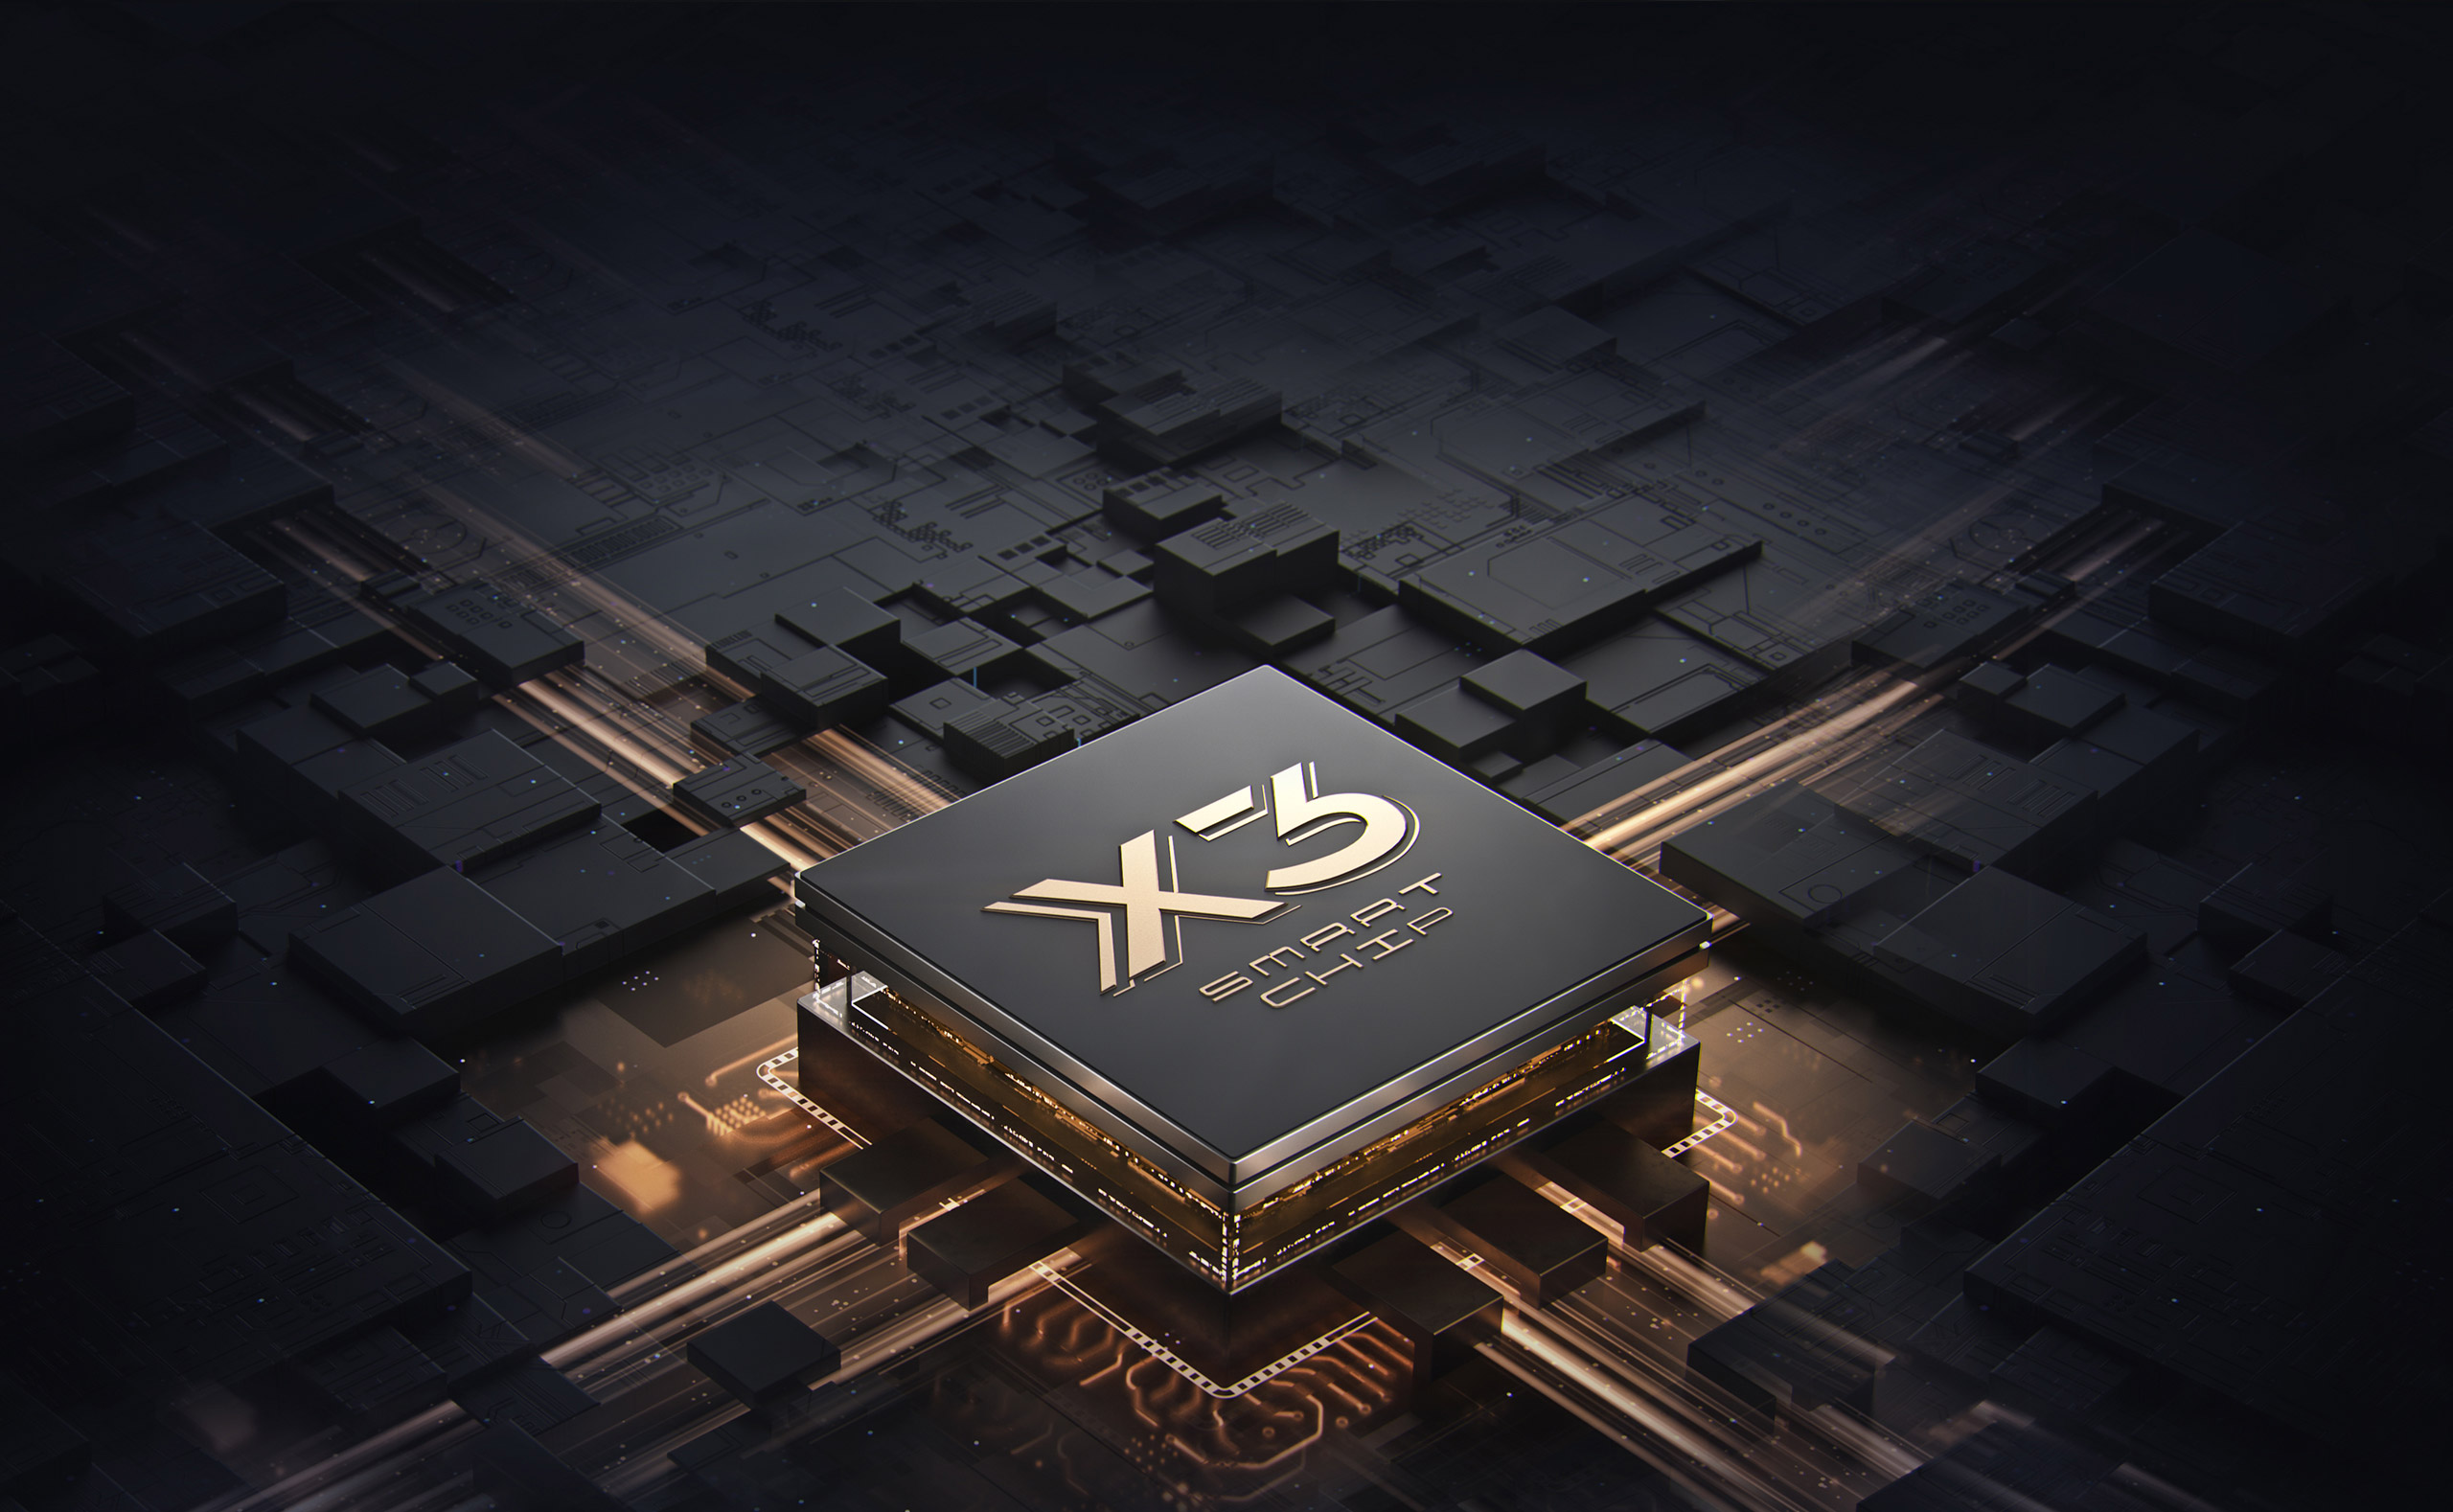 X3 Smart Chip